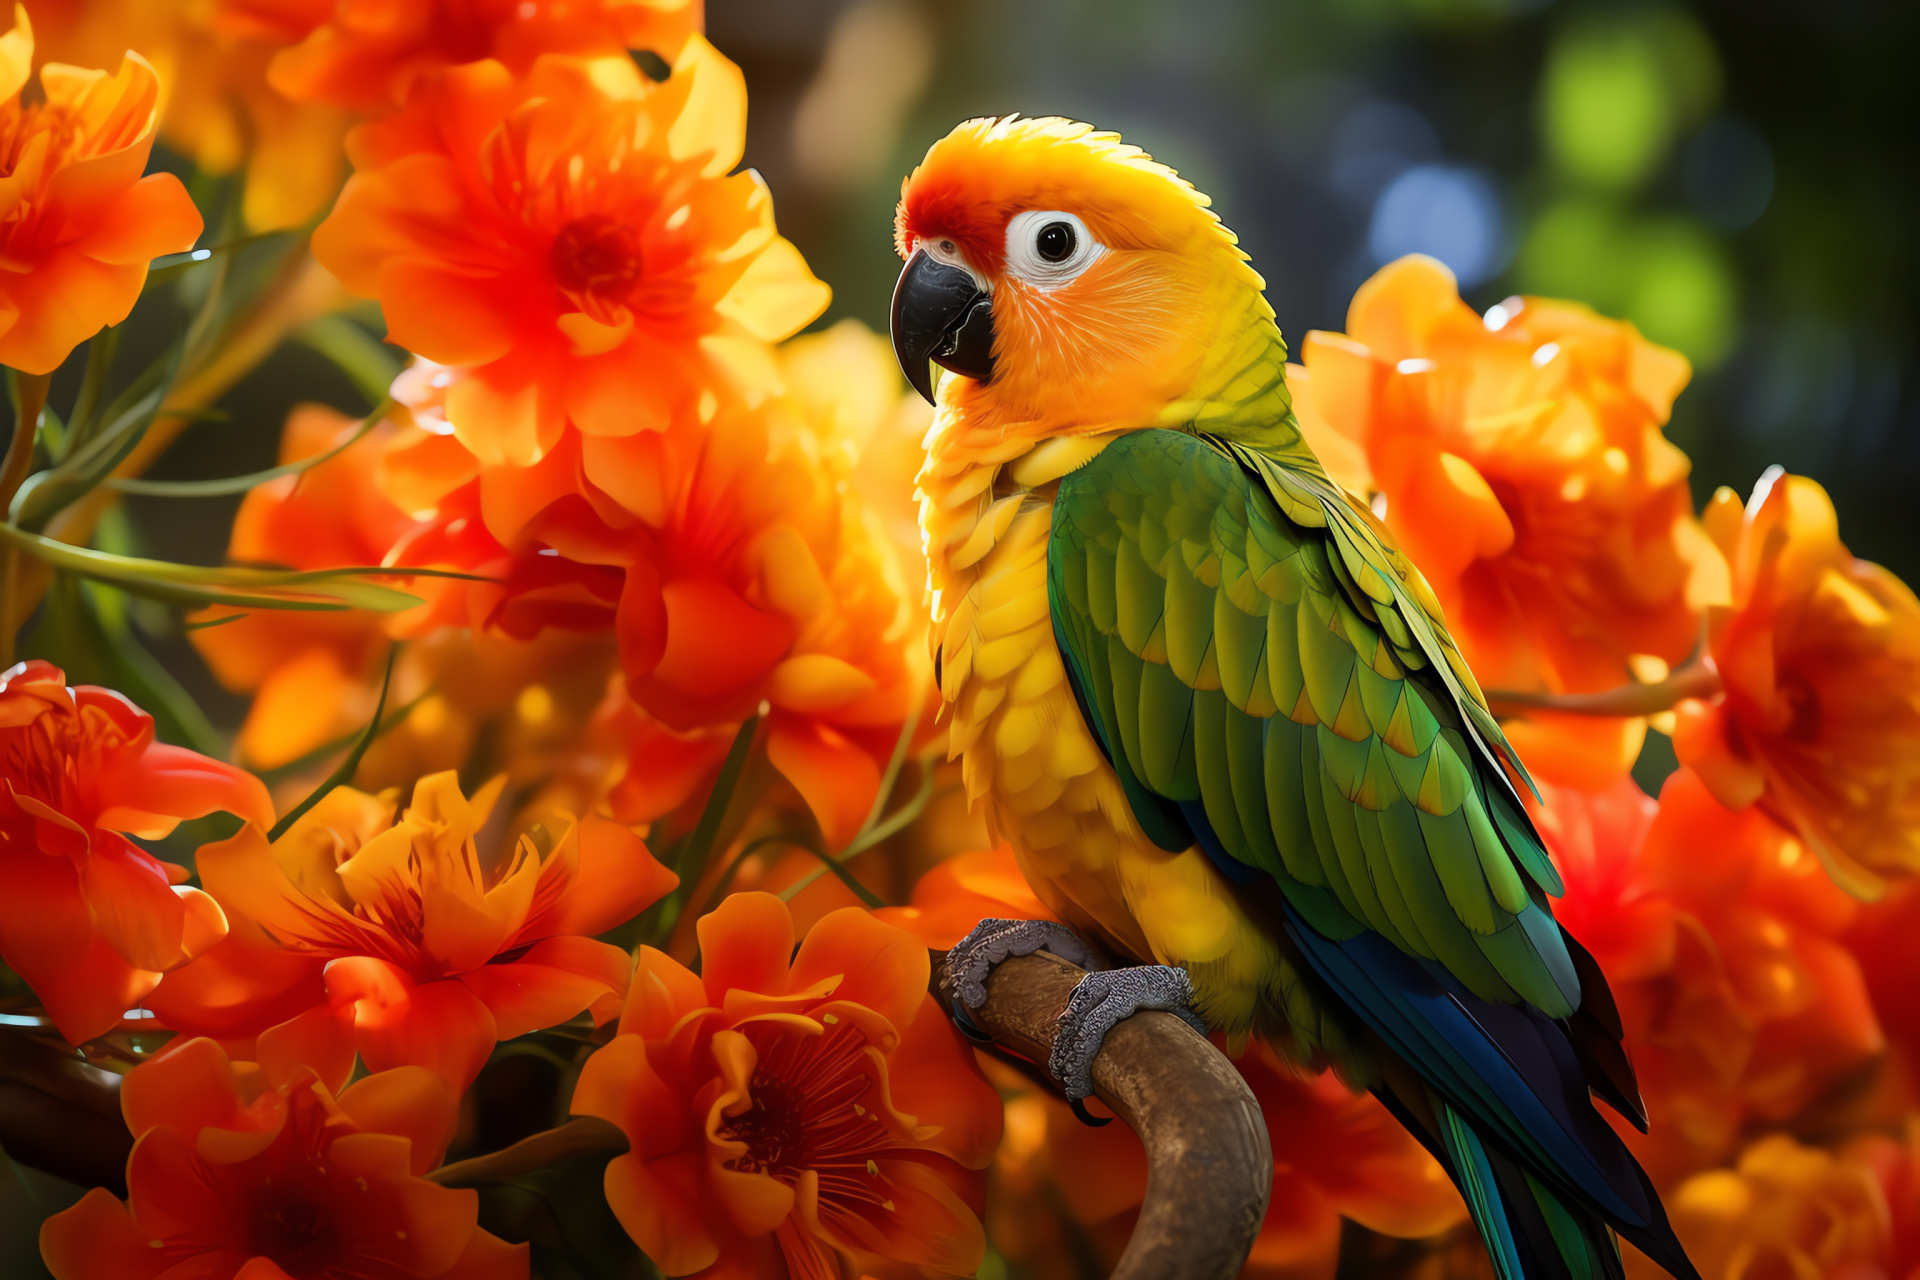 Parrot, Sun Conure, tropical bird, vibrant plumage, garden fauna, HD Desktop Image